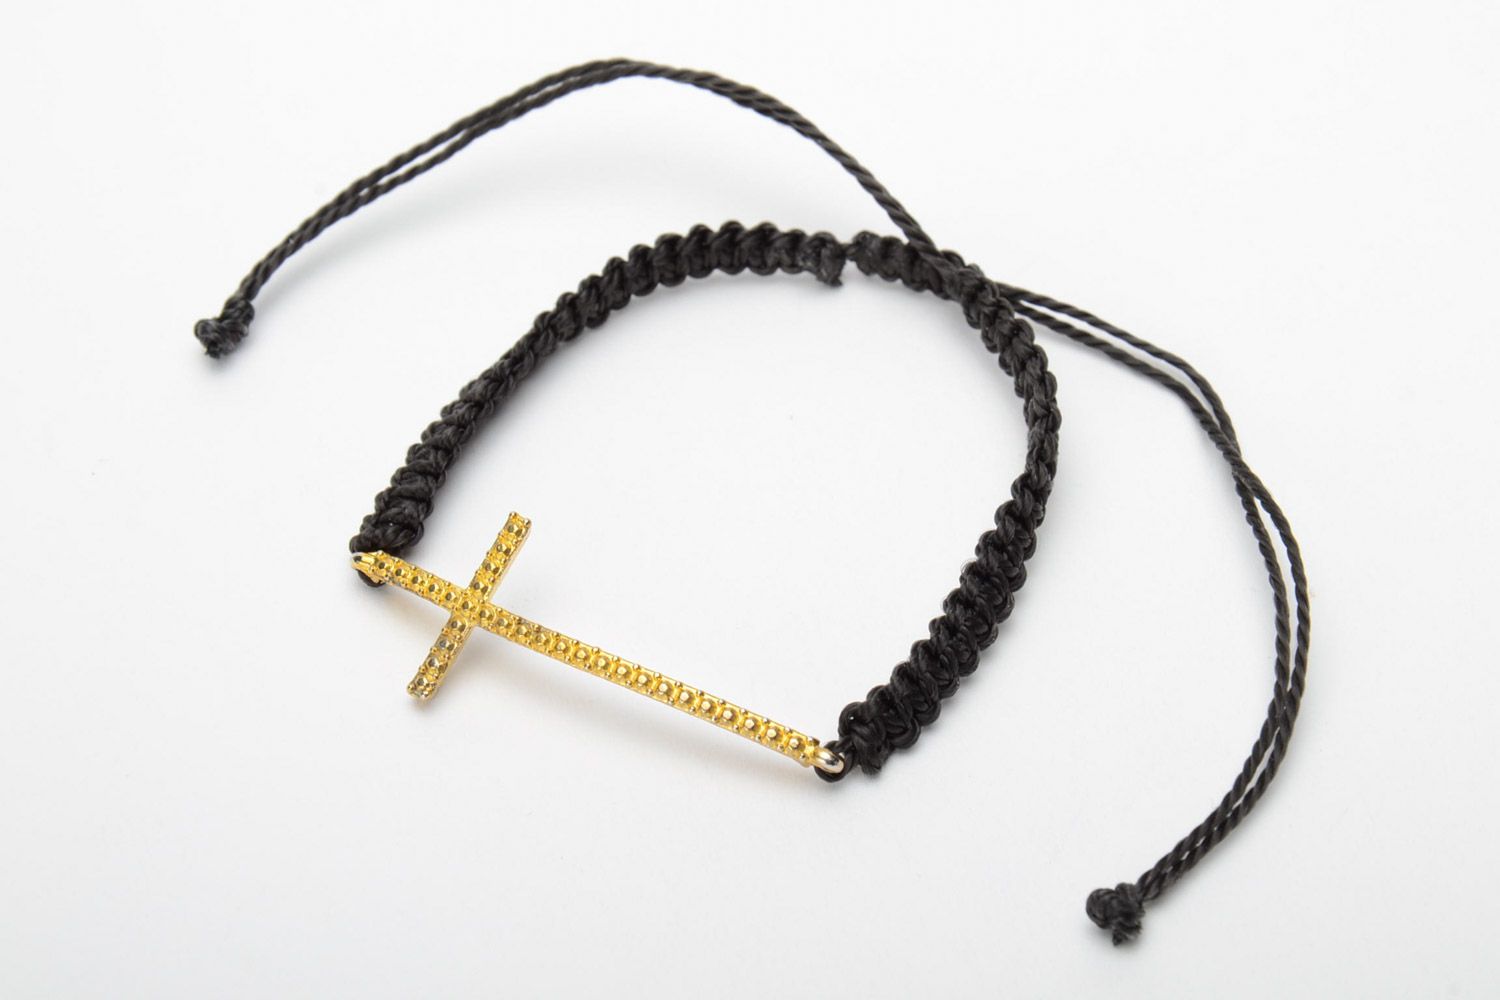 Handmade friendship wrist bracelet woven of caprone threads with metal cross charm photo 3